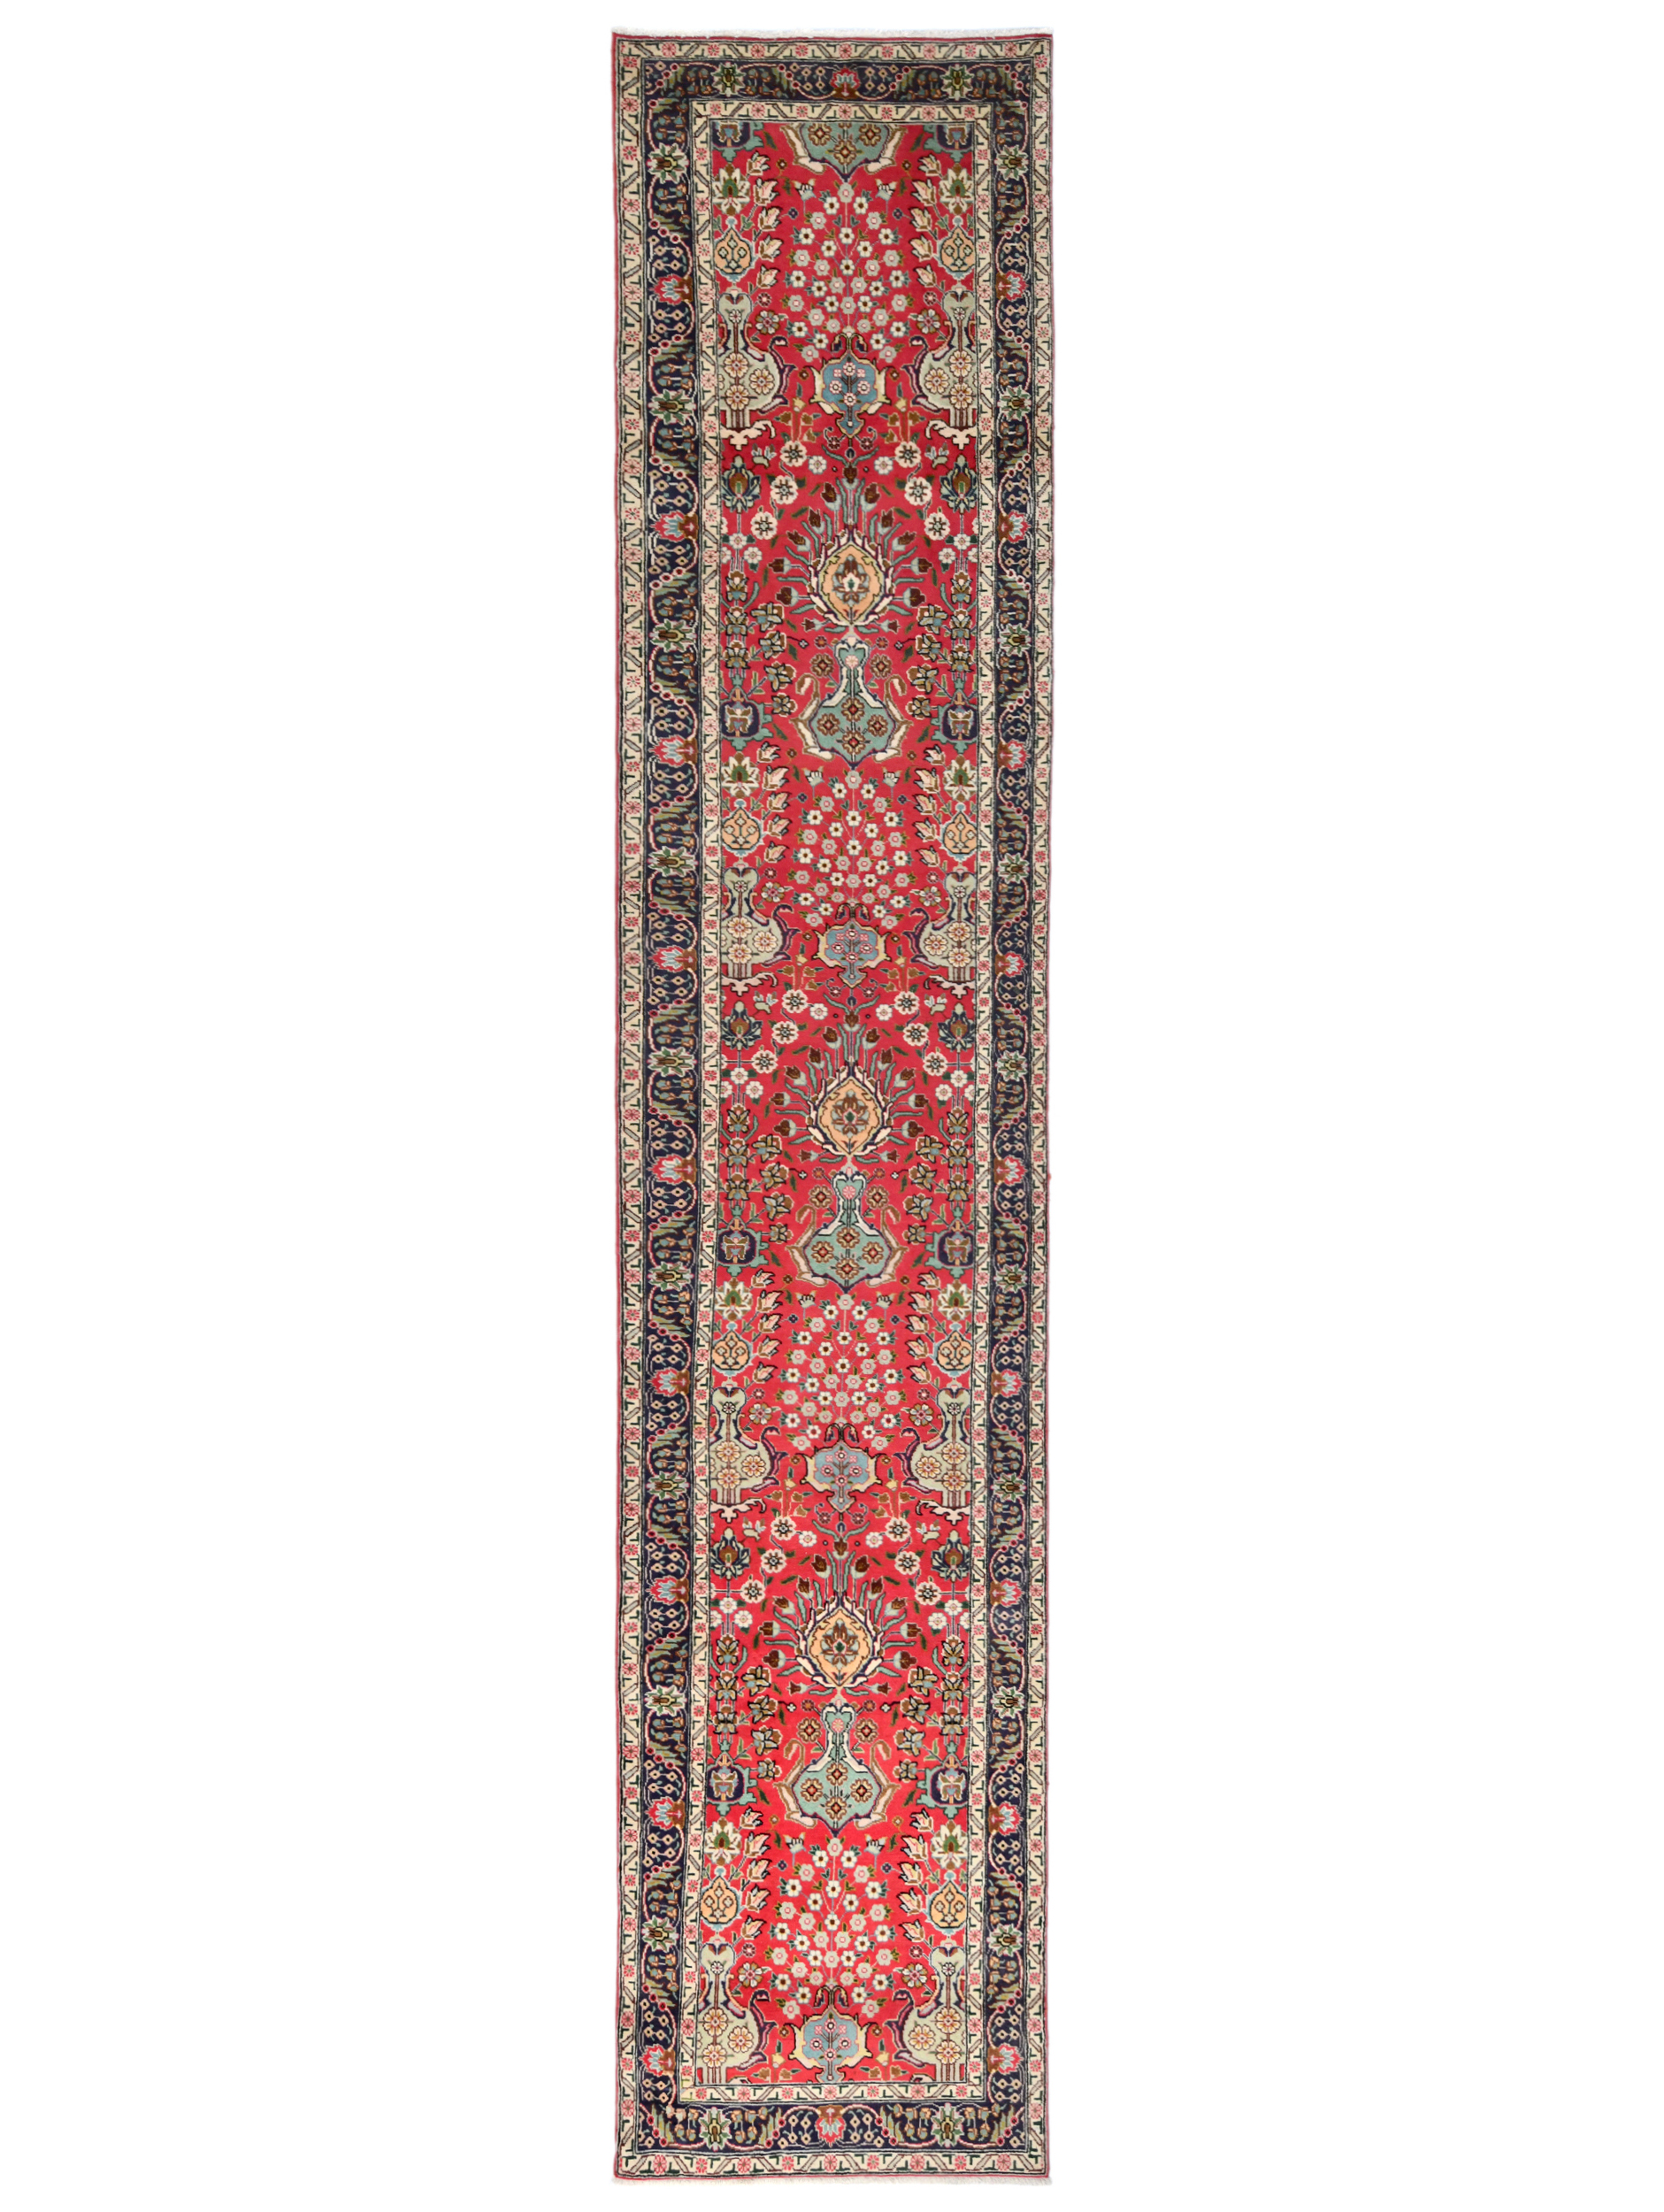 Vintage Red Traditional 3X16 Tabriz Persian Runner Rug